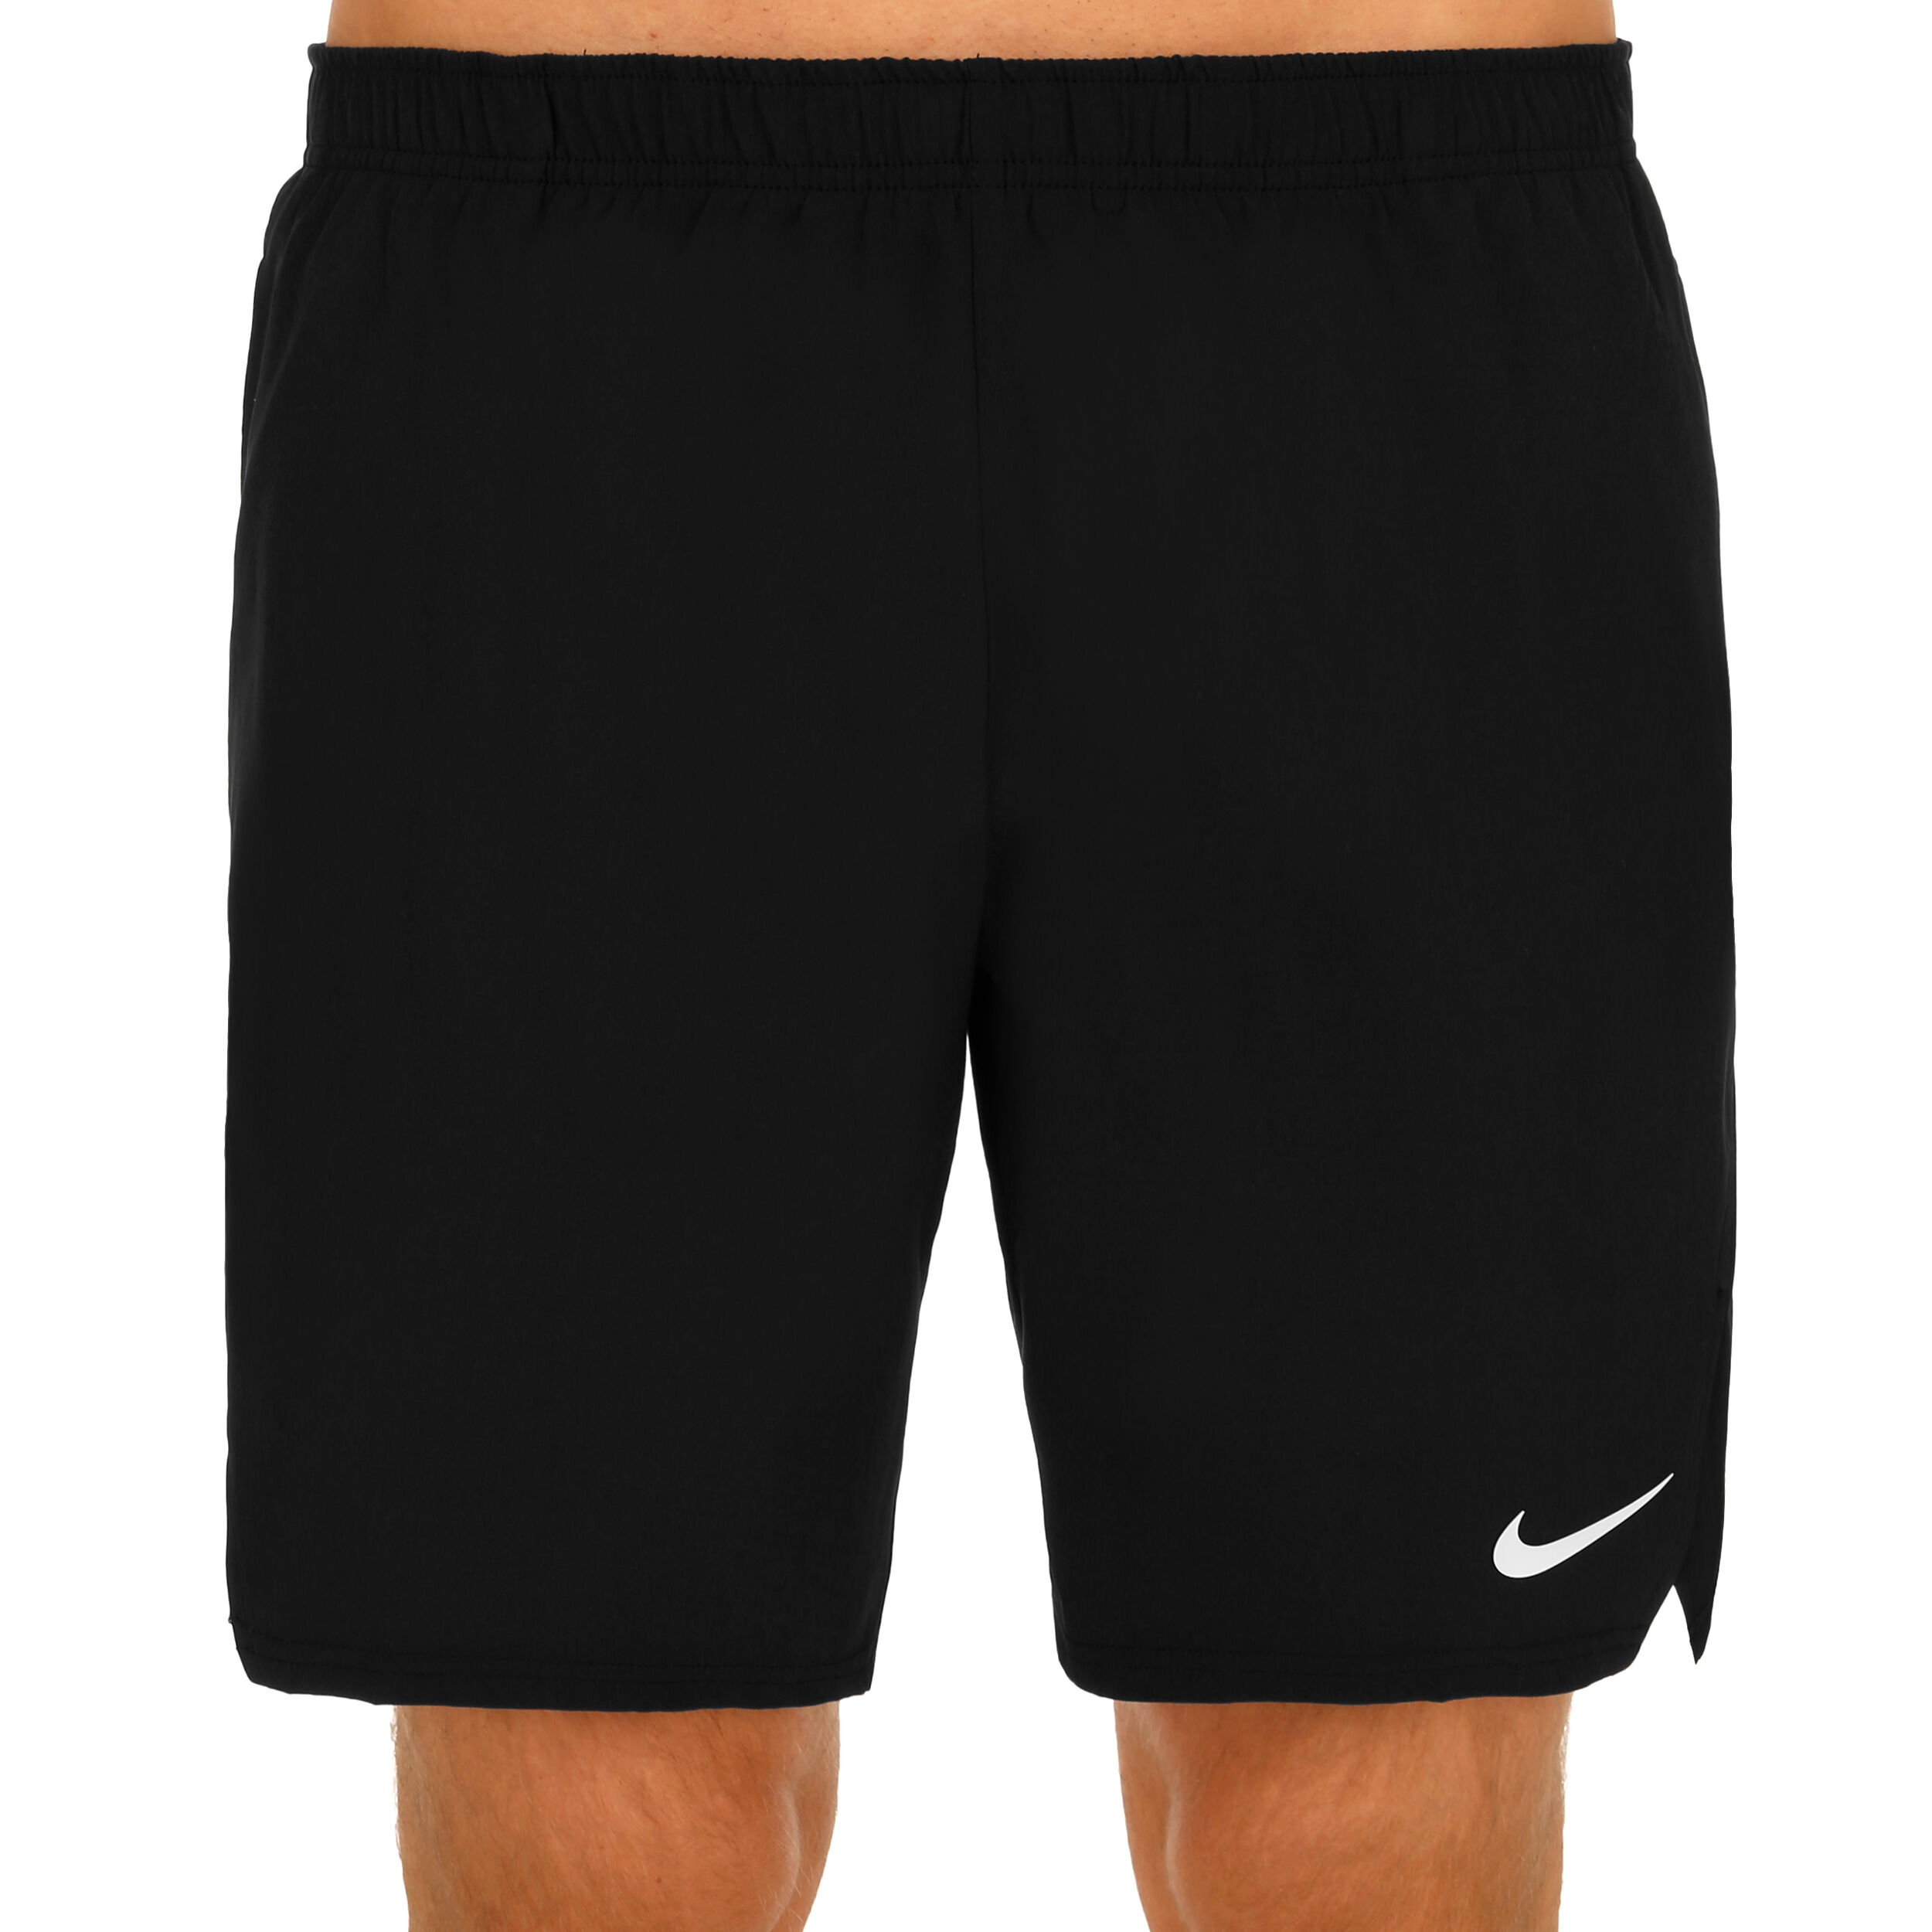 nikecourt flex ace tennis shorts